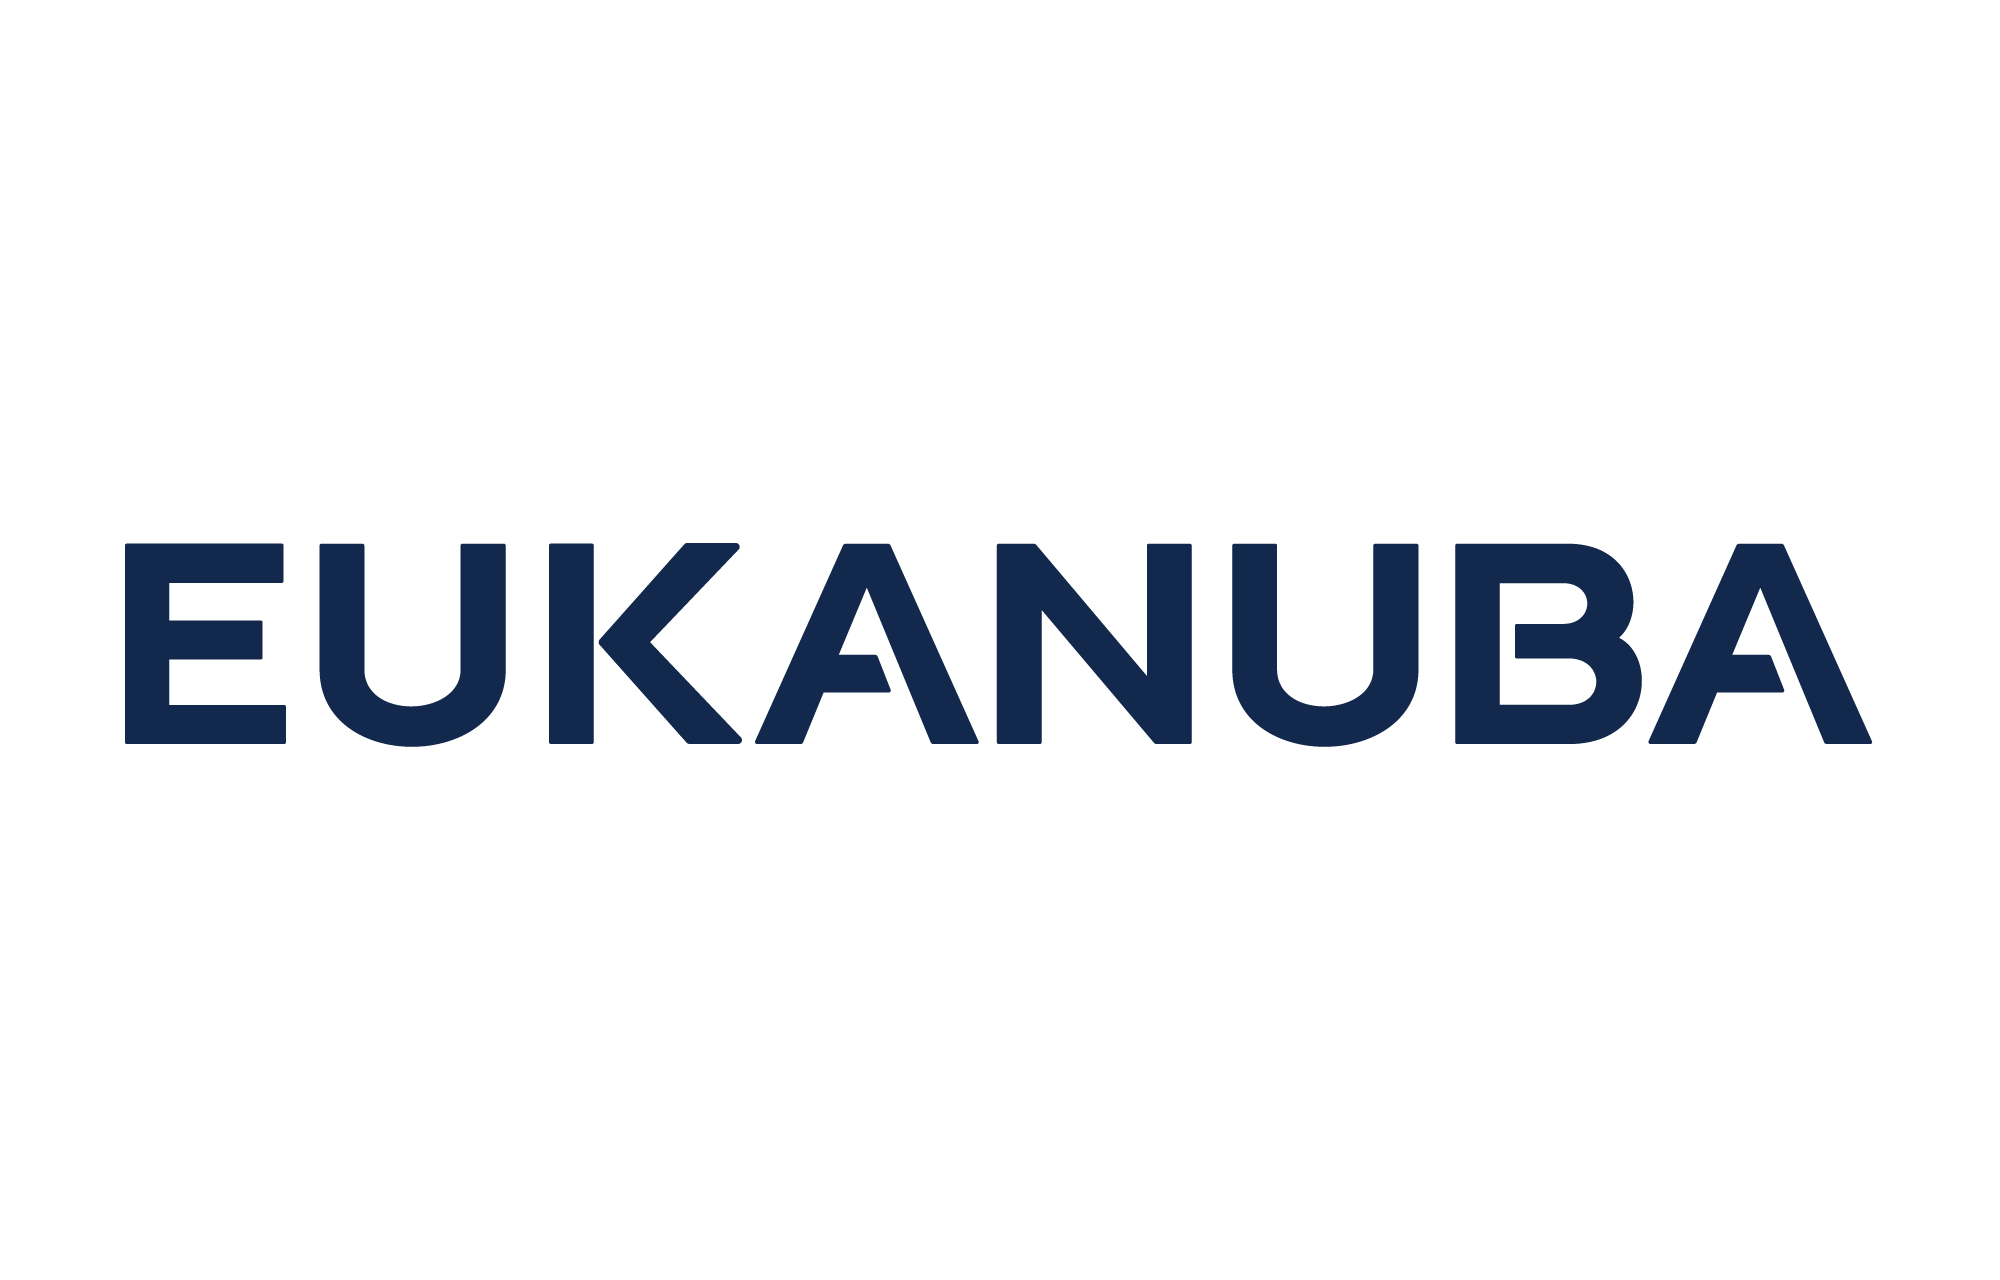 Blue Eukanuba logo